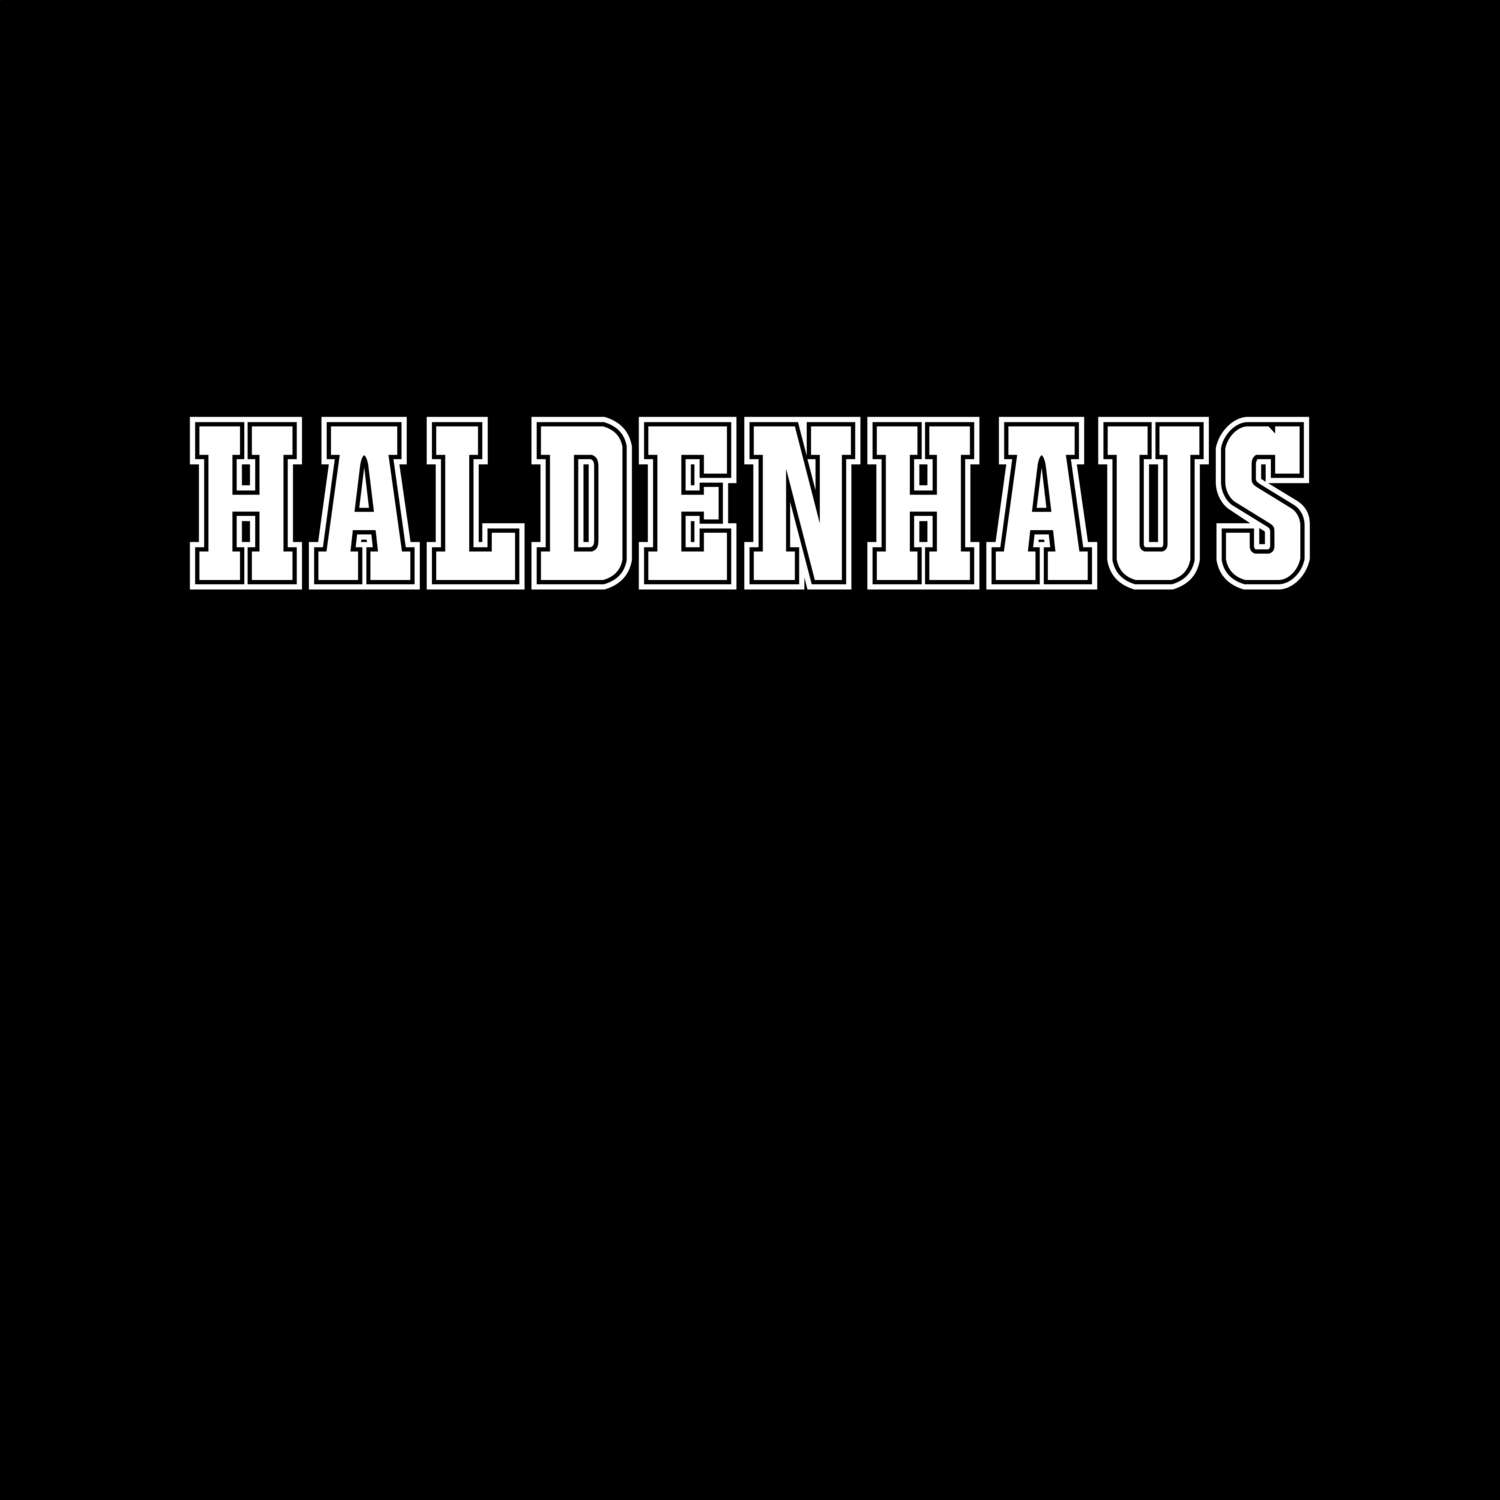 Haldenhaus T-Shirt »Classic«